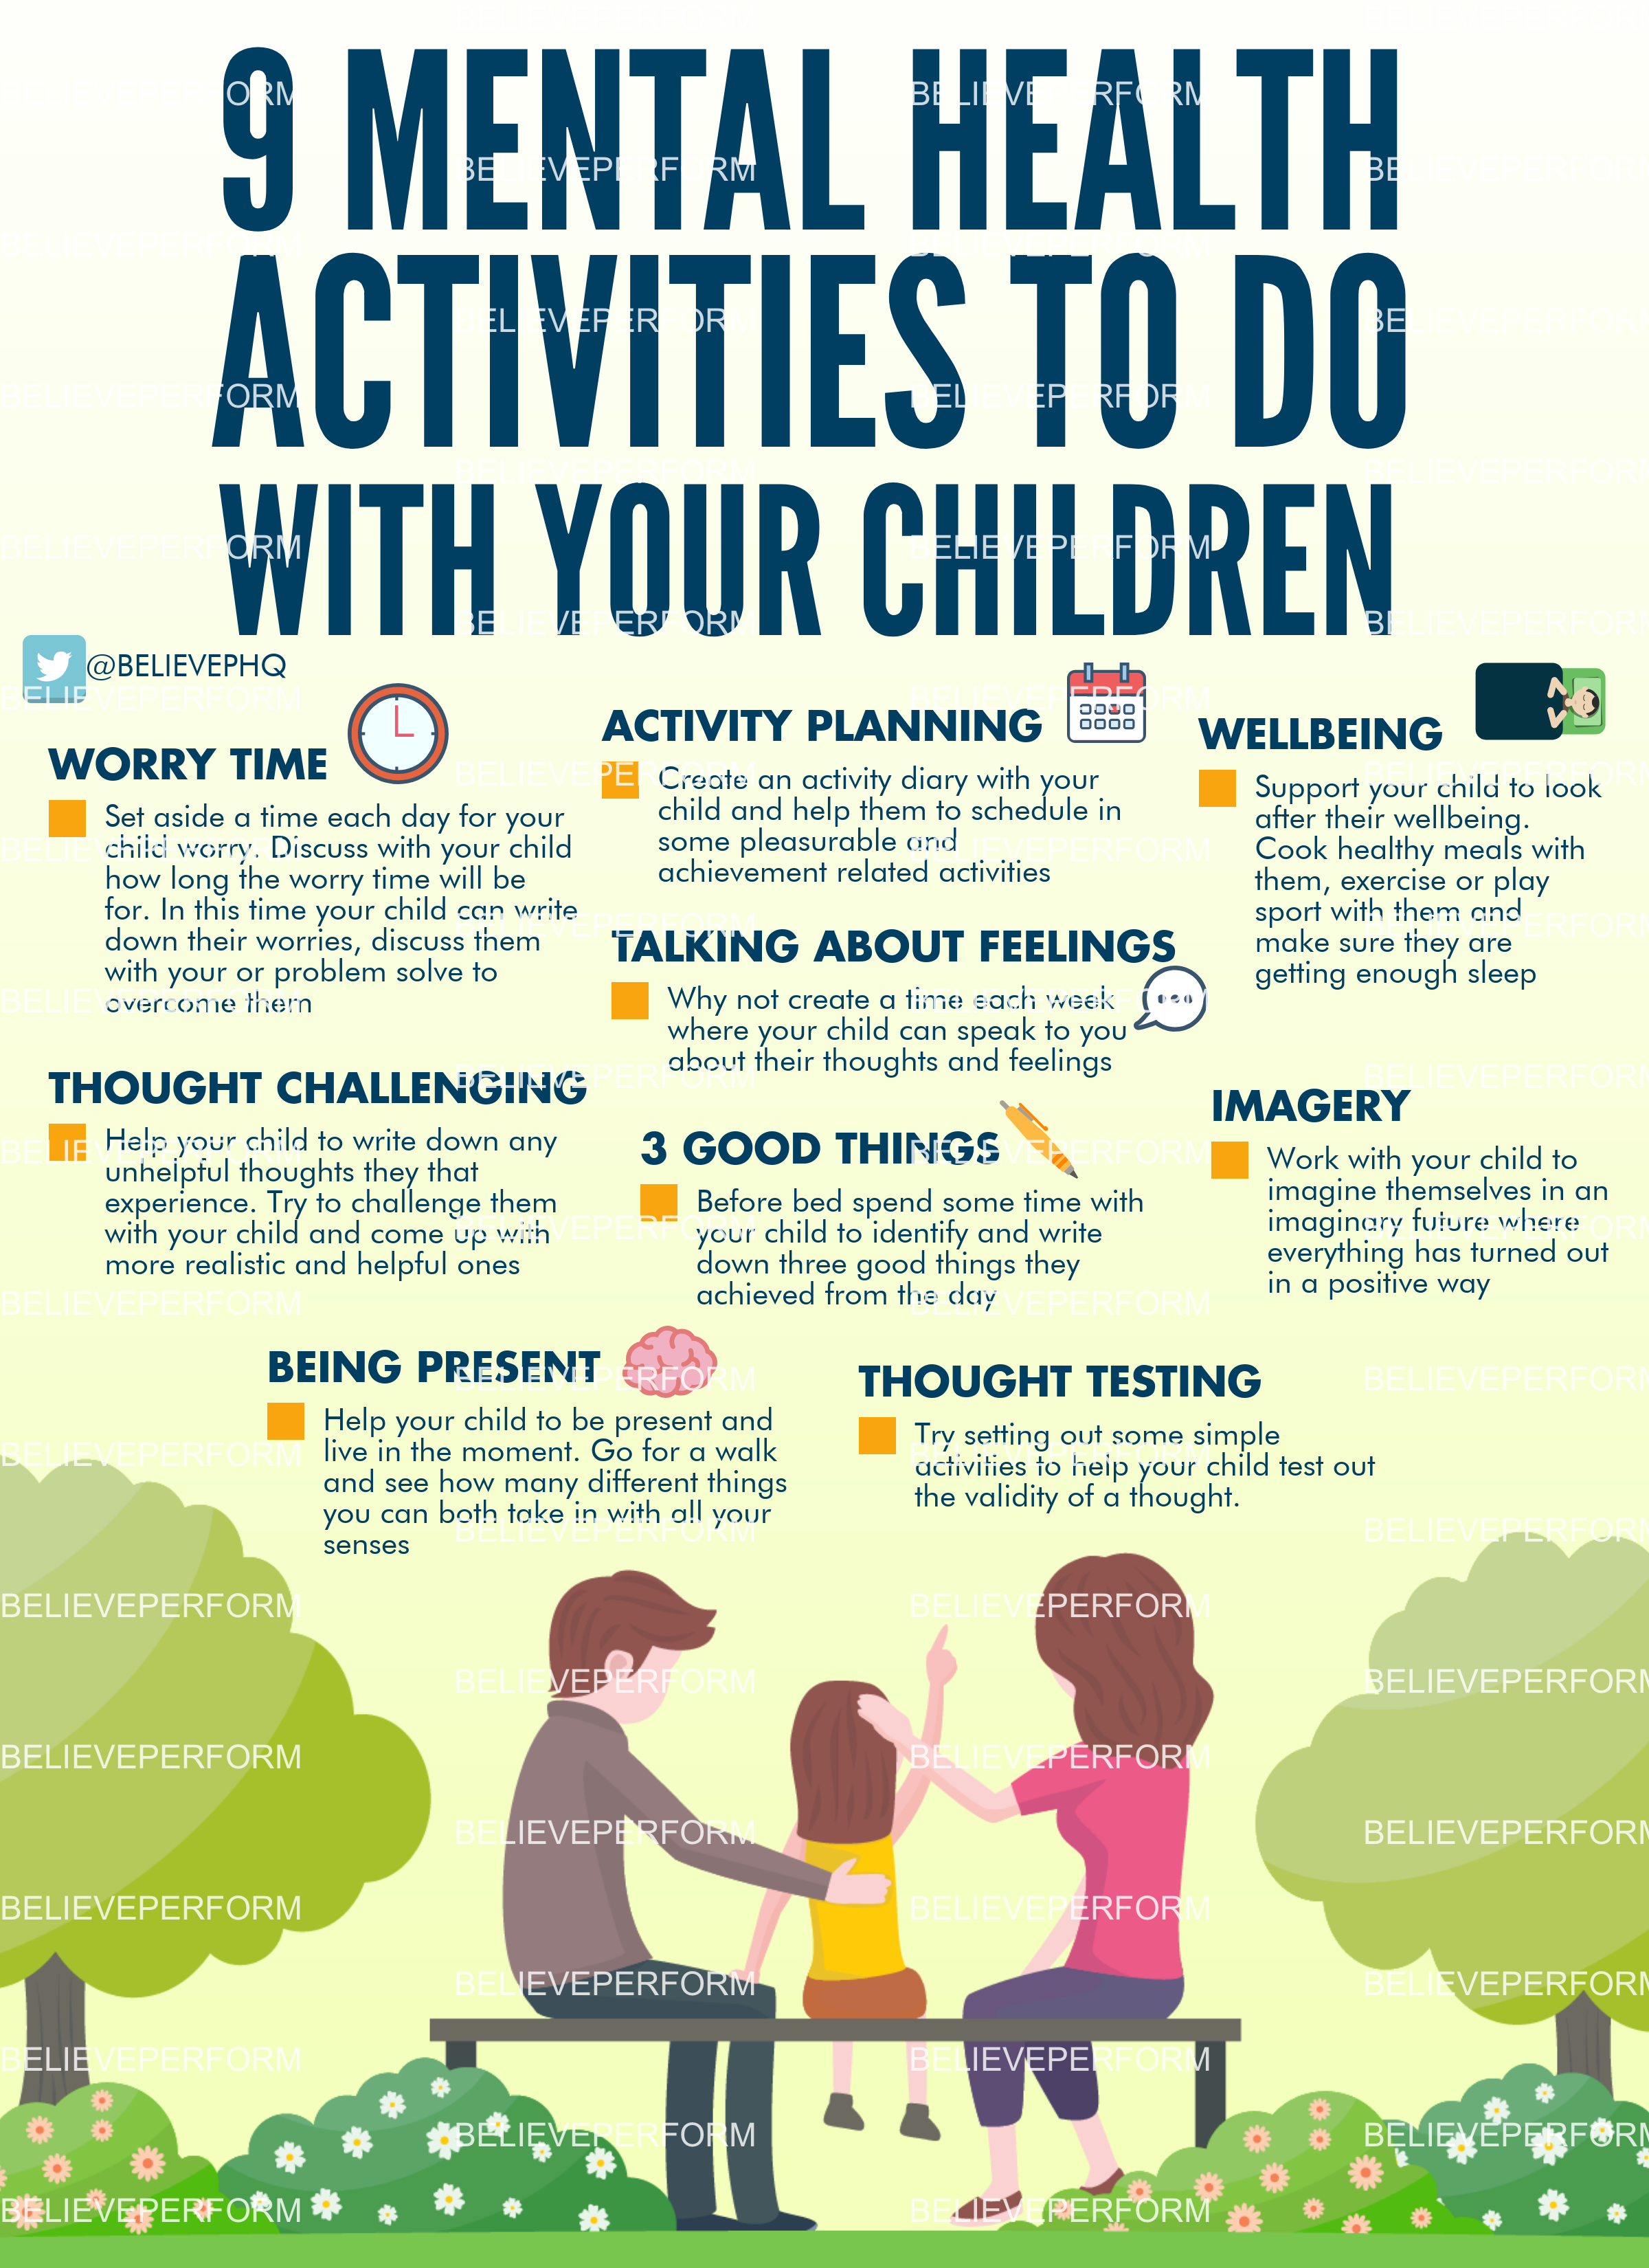 9 mental health activities to do with your children - BelievePerform ...